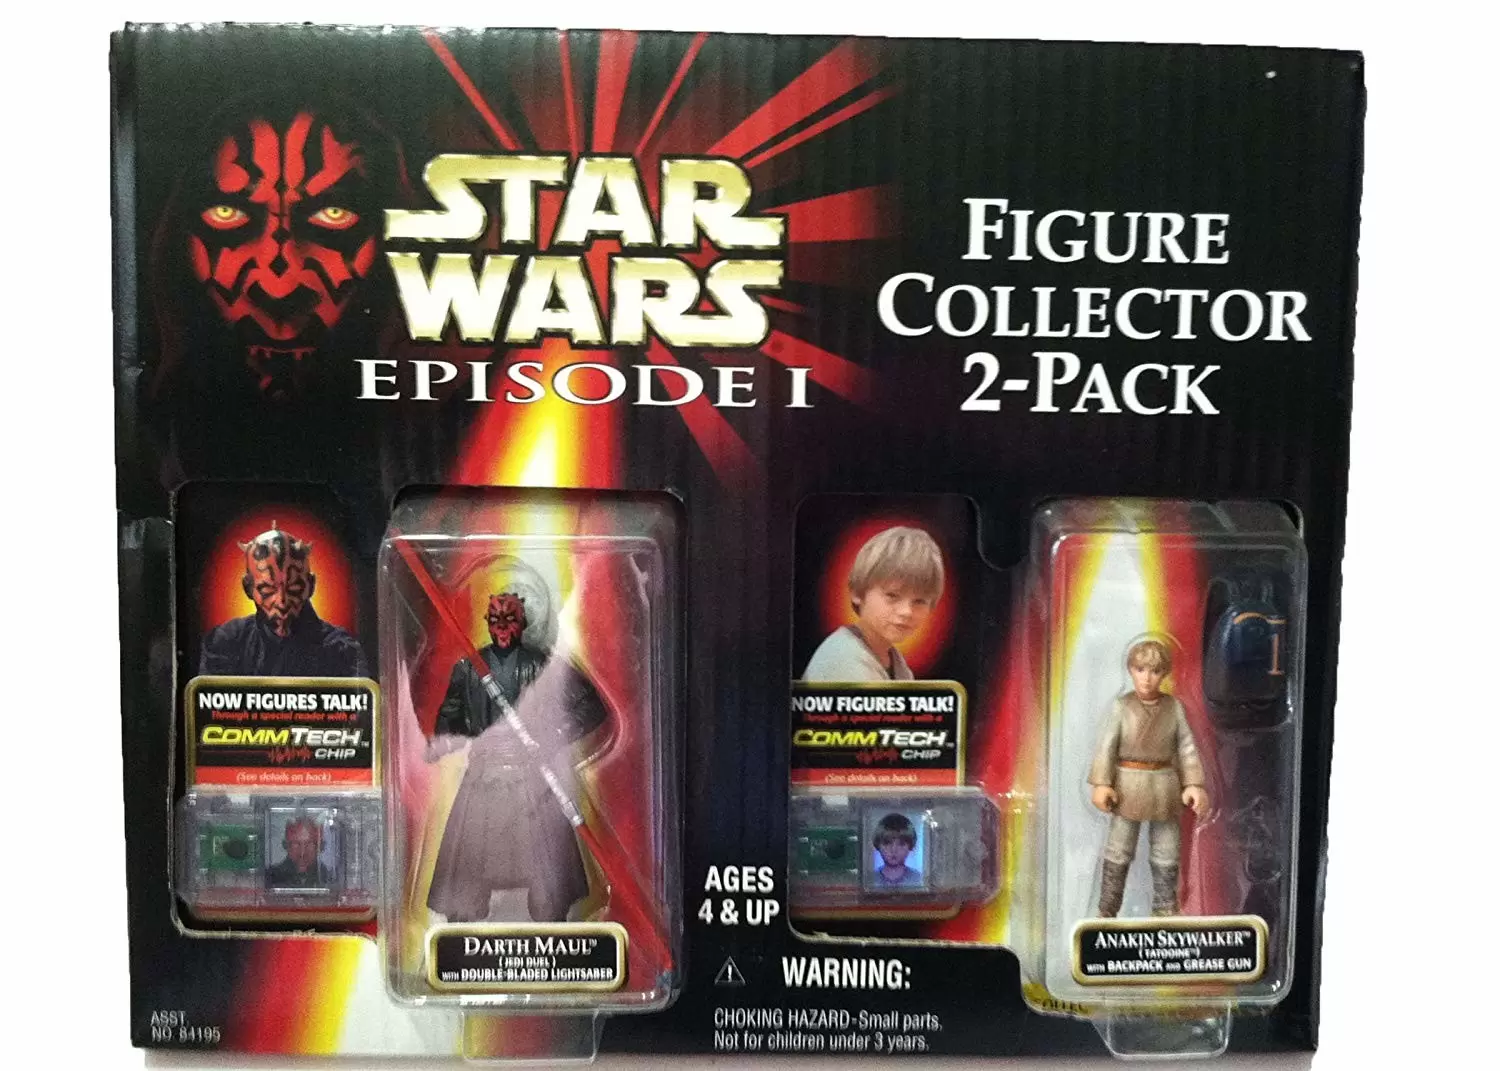 Episode 1 - Anakin Skywalker & Darth Maul - Figure Collector 2-Pack